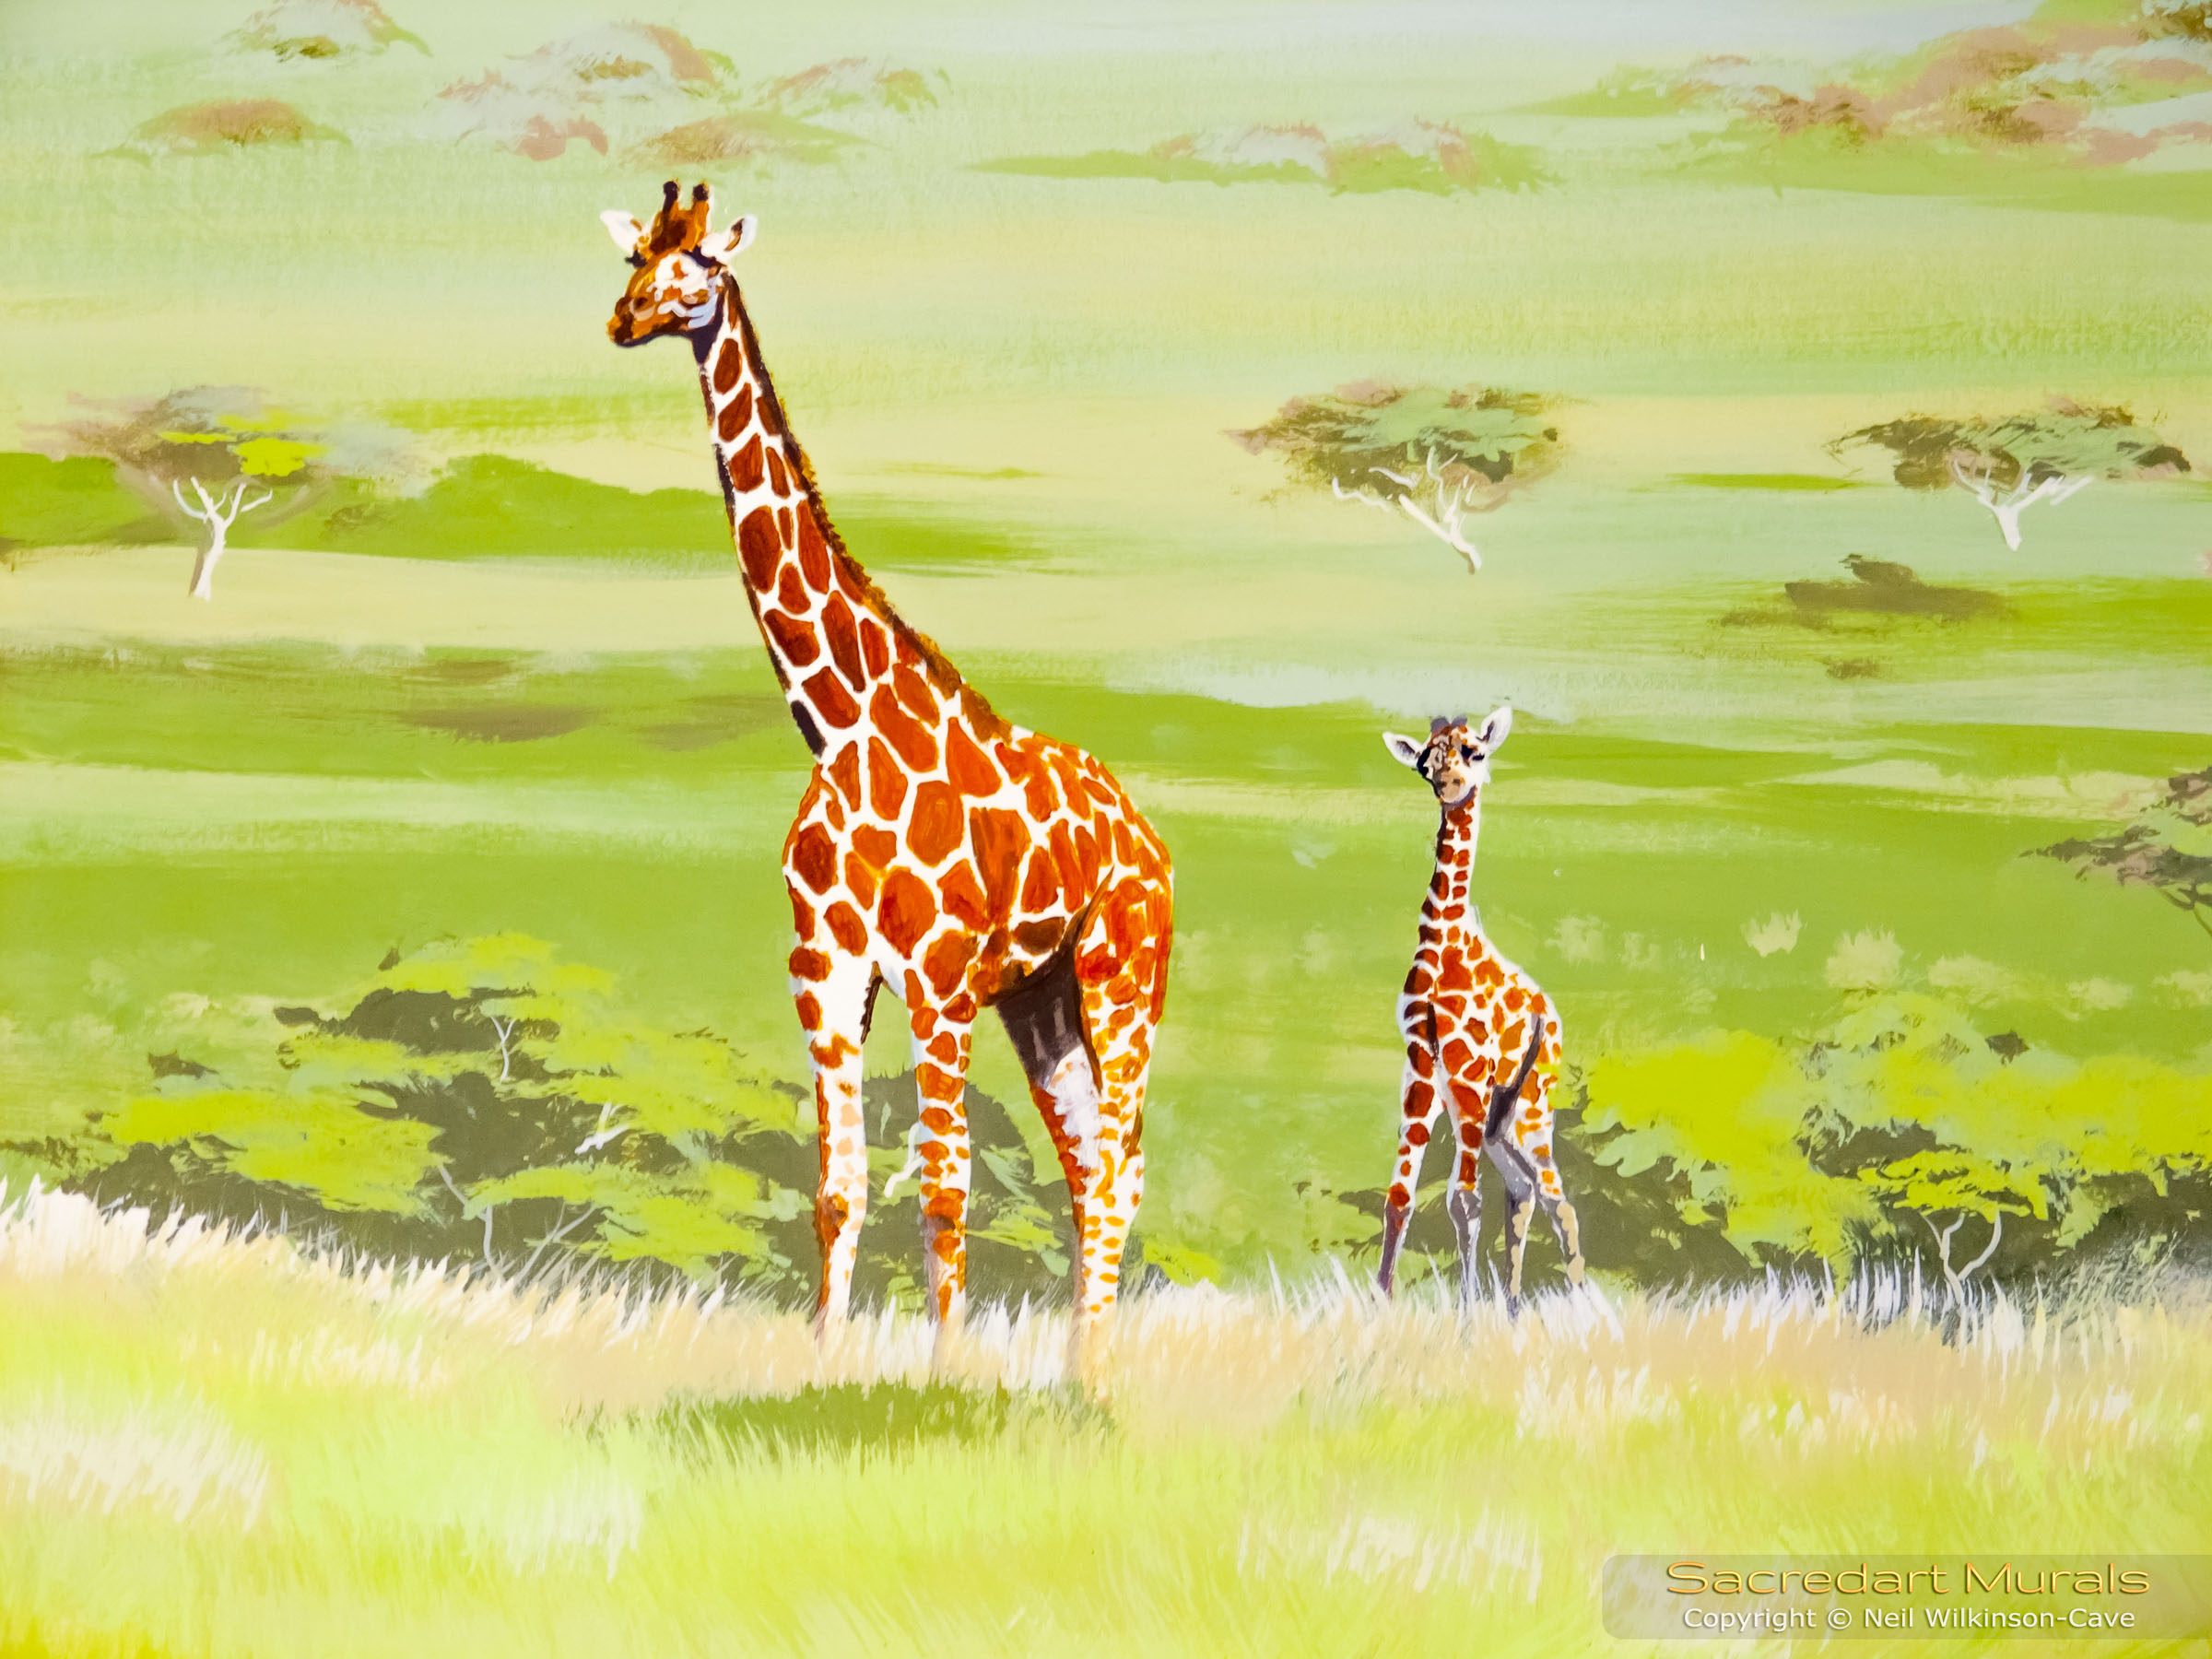 Giraffes mothr and baby in mural